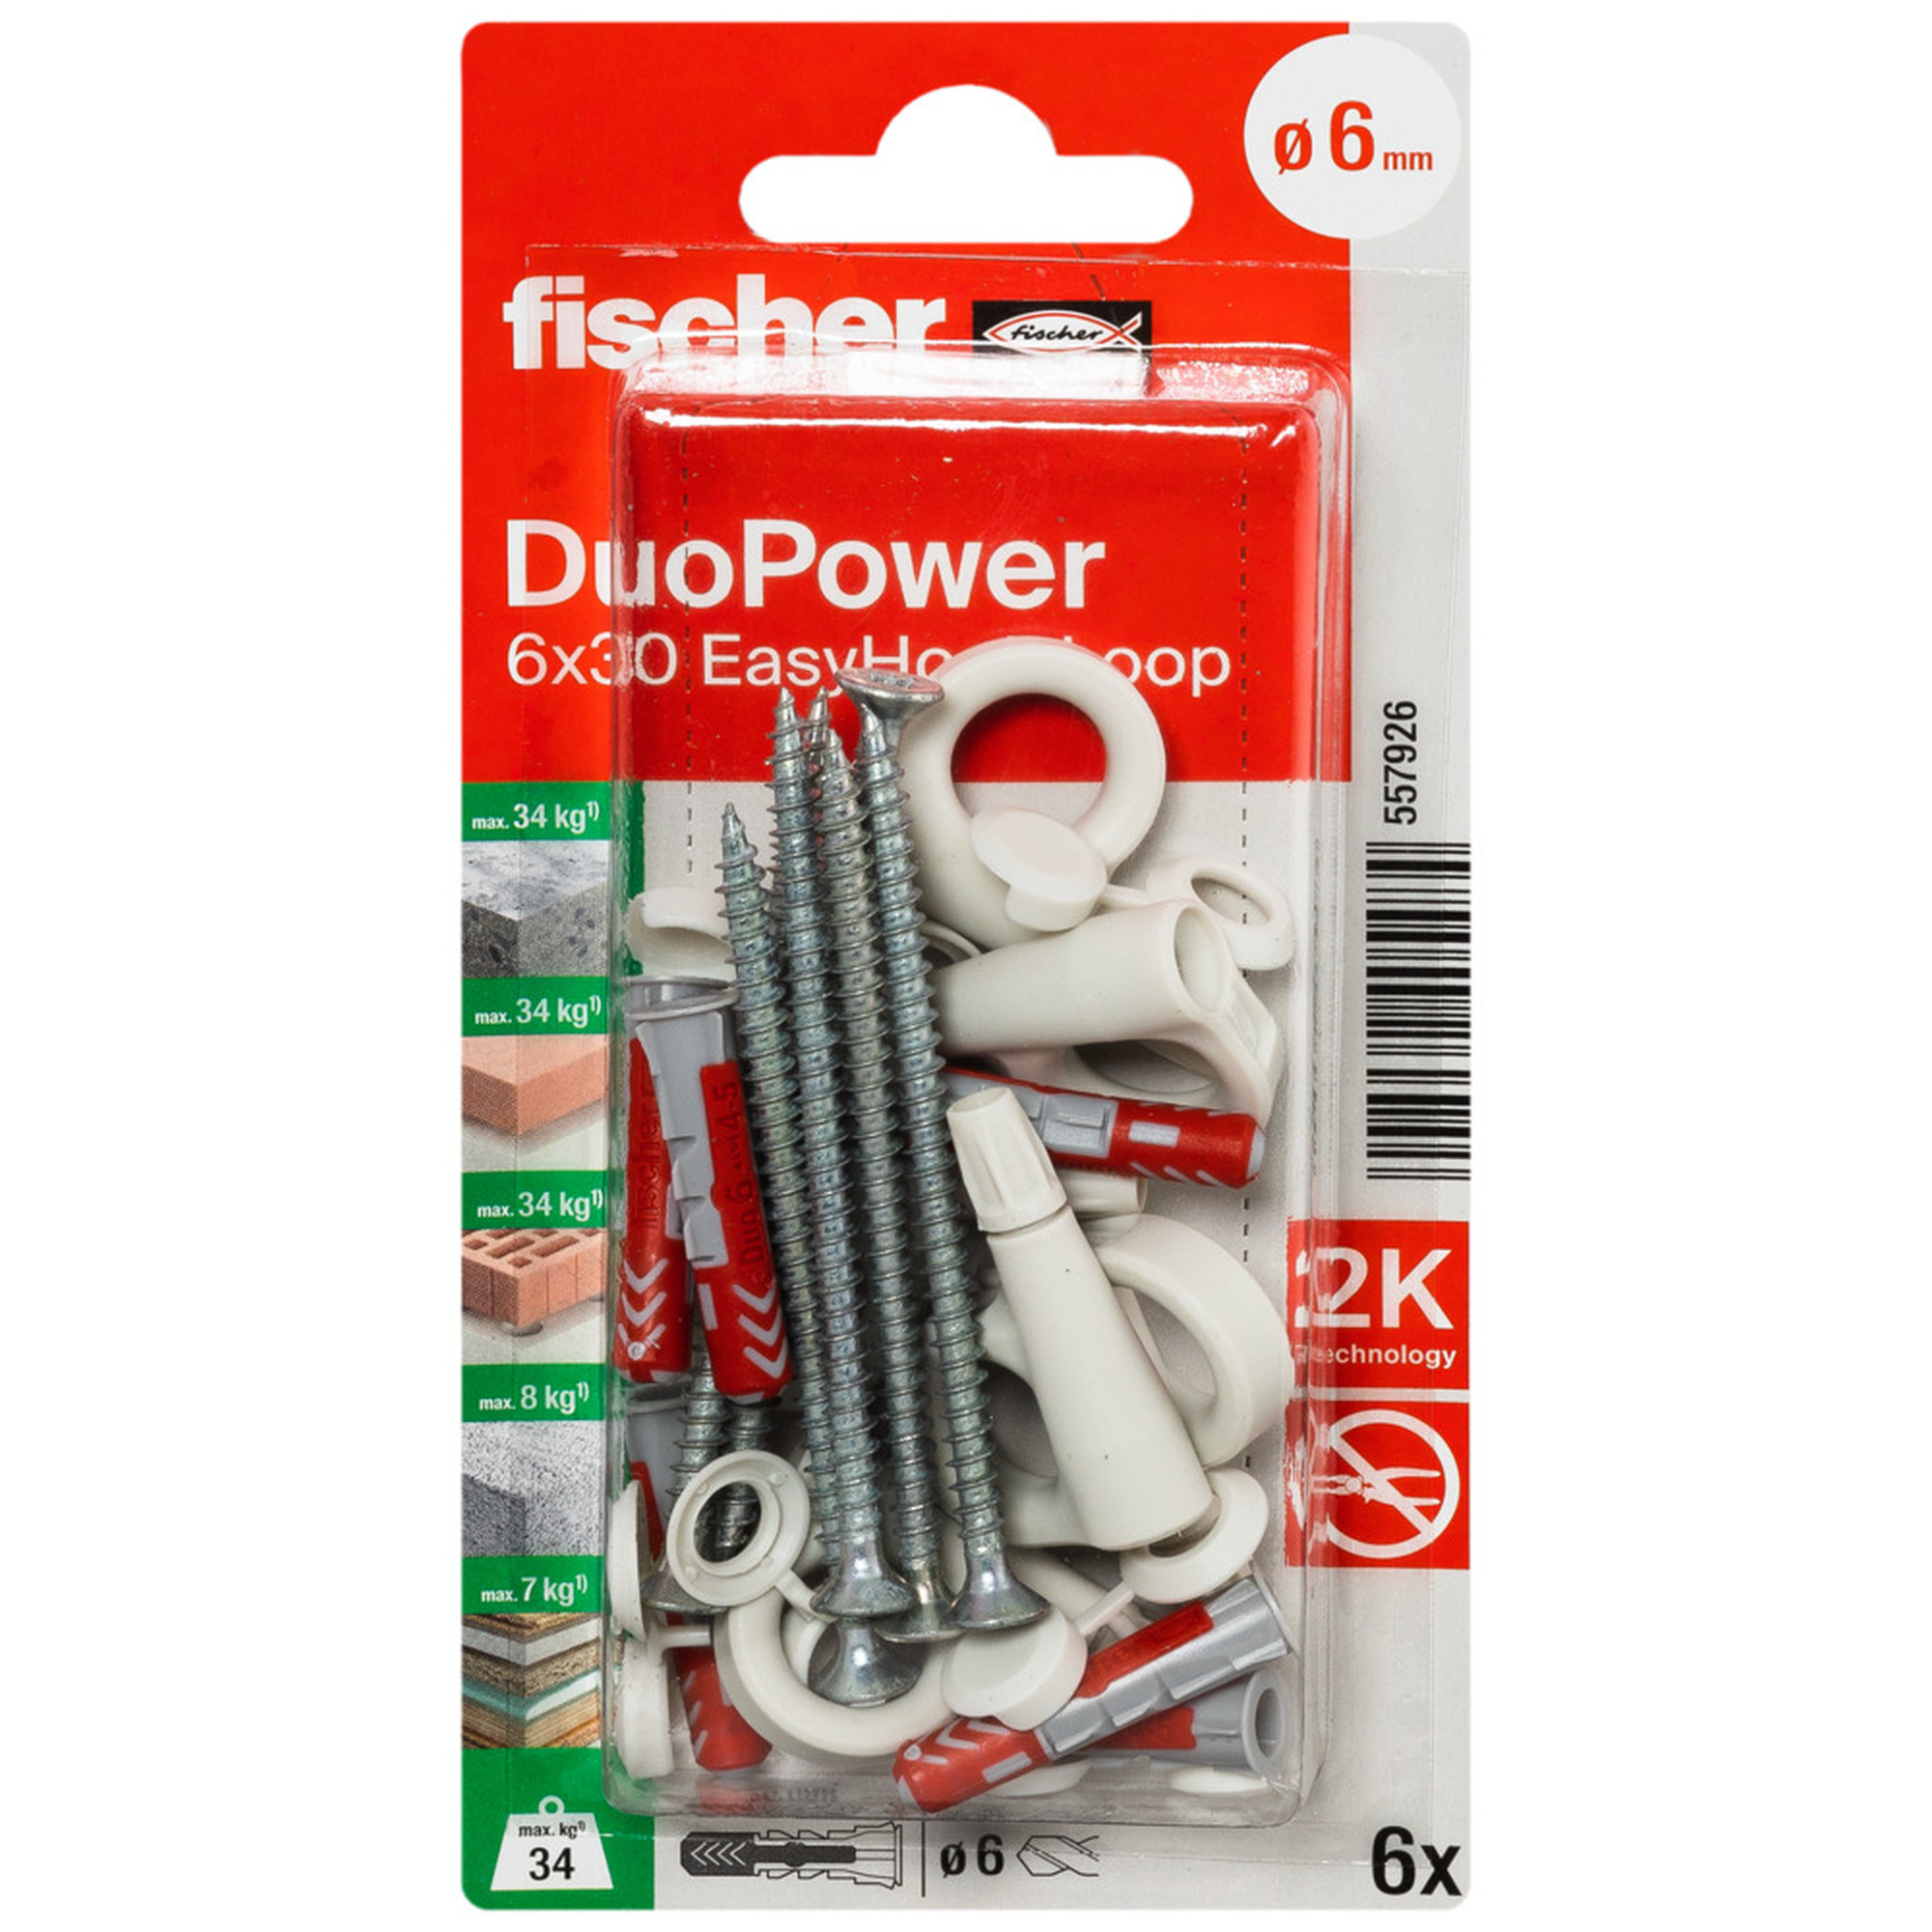 Dübel mit Ösenhaken 'DuoPower EasyHook Loop' Ø 6 x 30 mm, 6 Stück + product picture